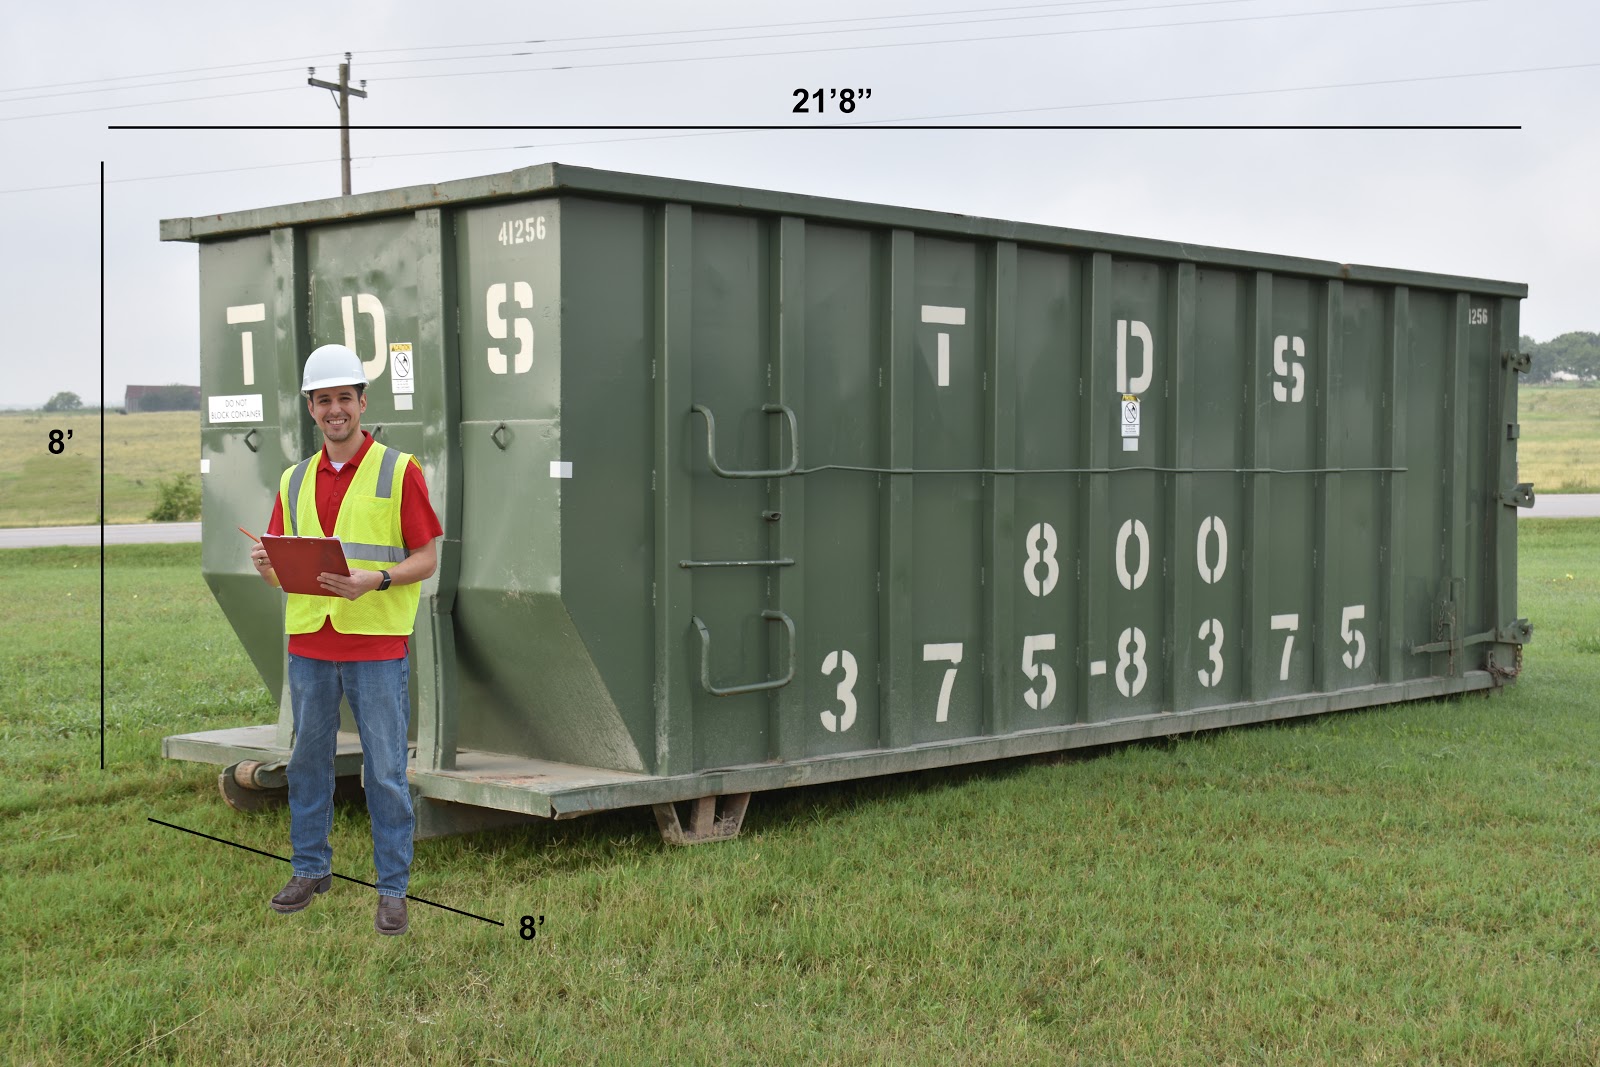 40-yard dumpster rental dimensions